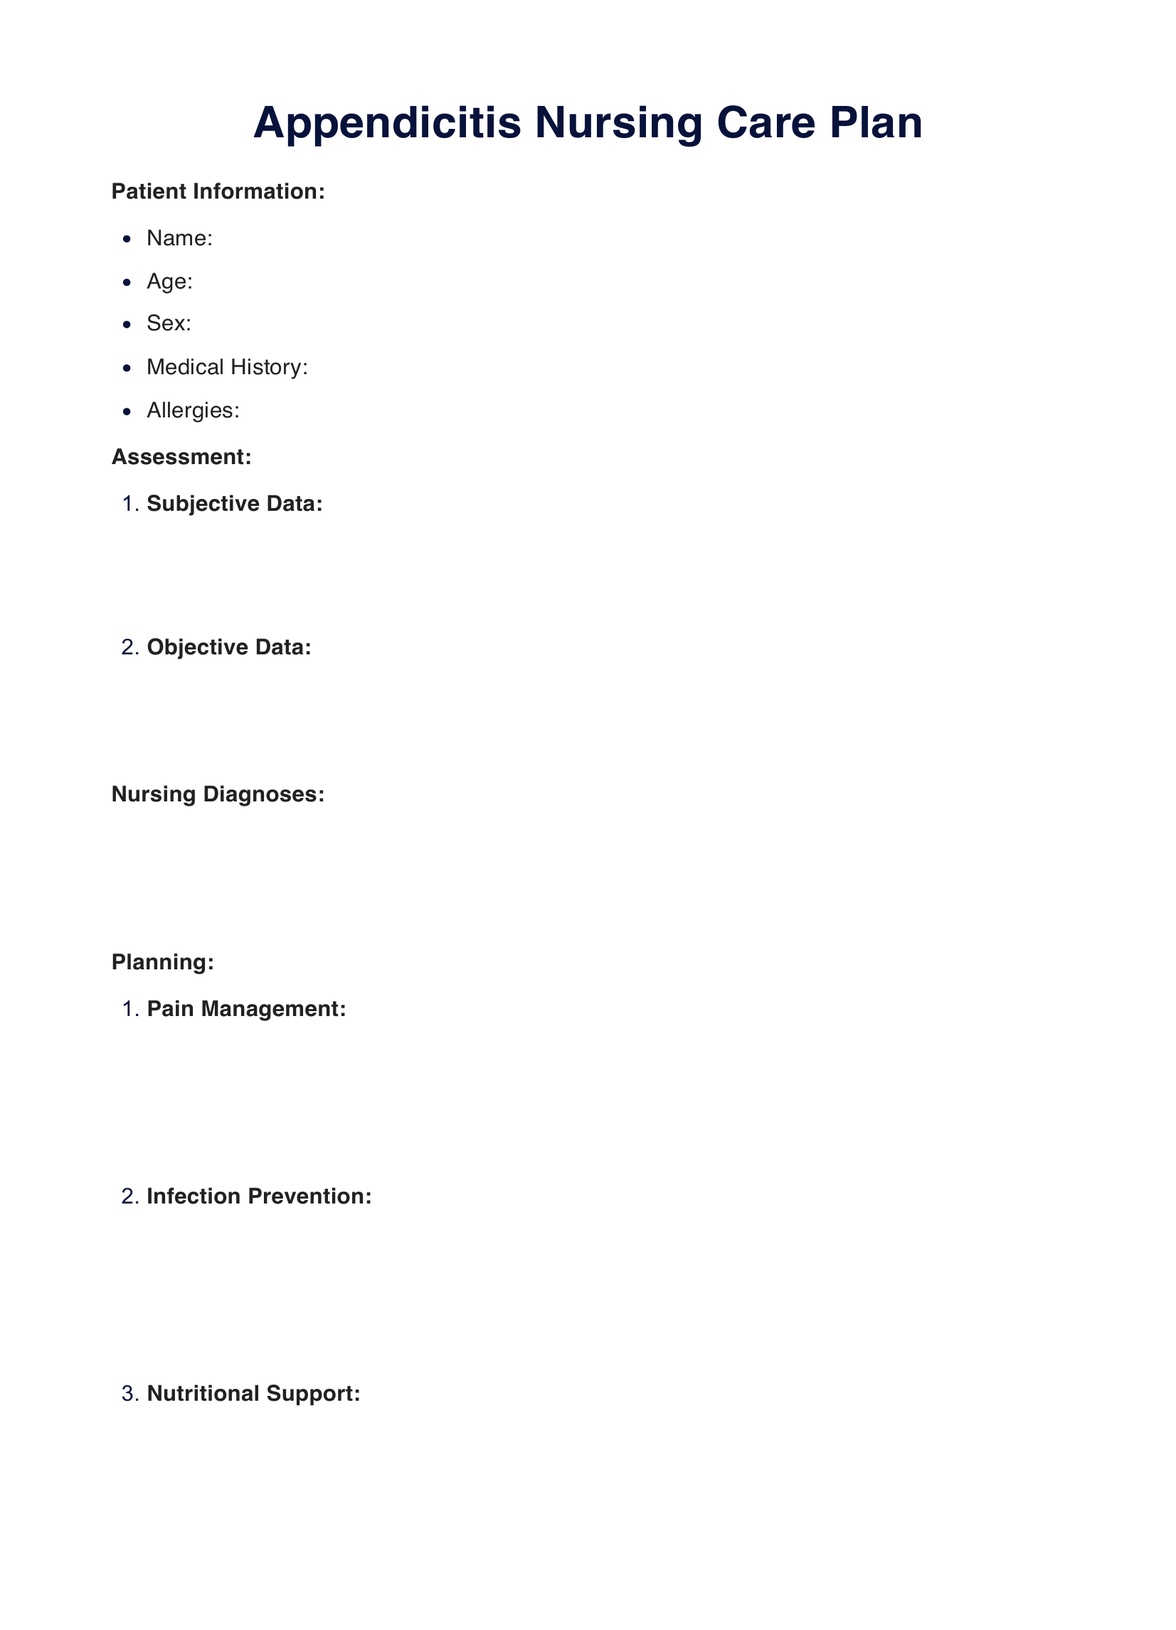 Appendicitis Nursing Care Plan PDF Example